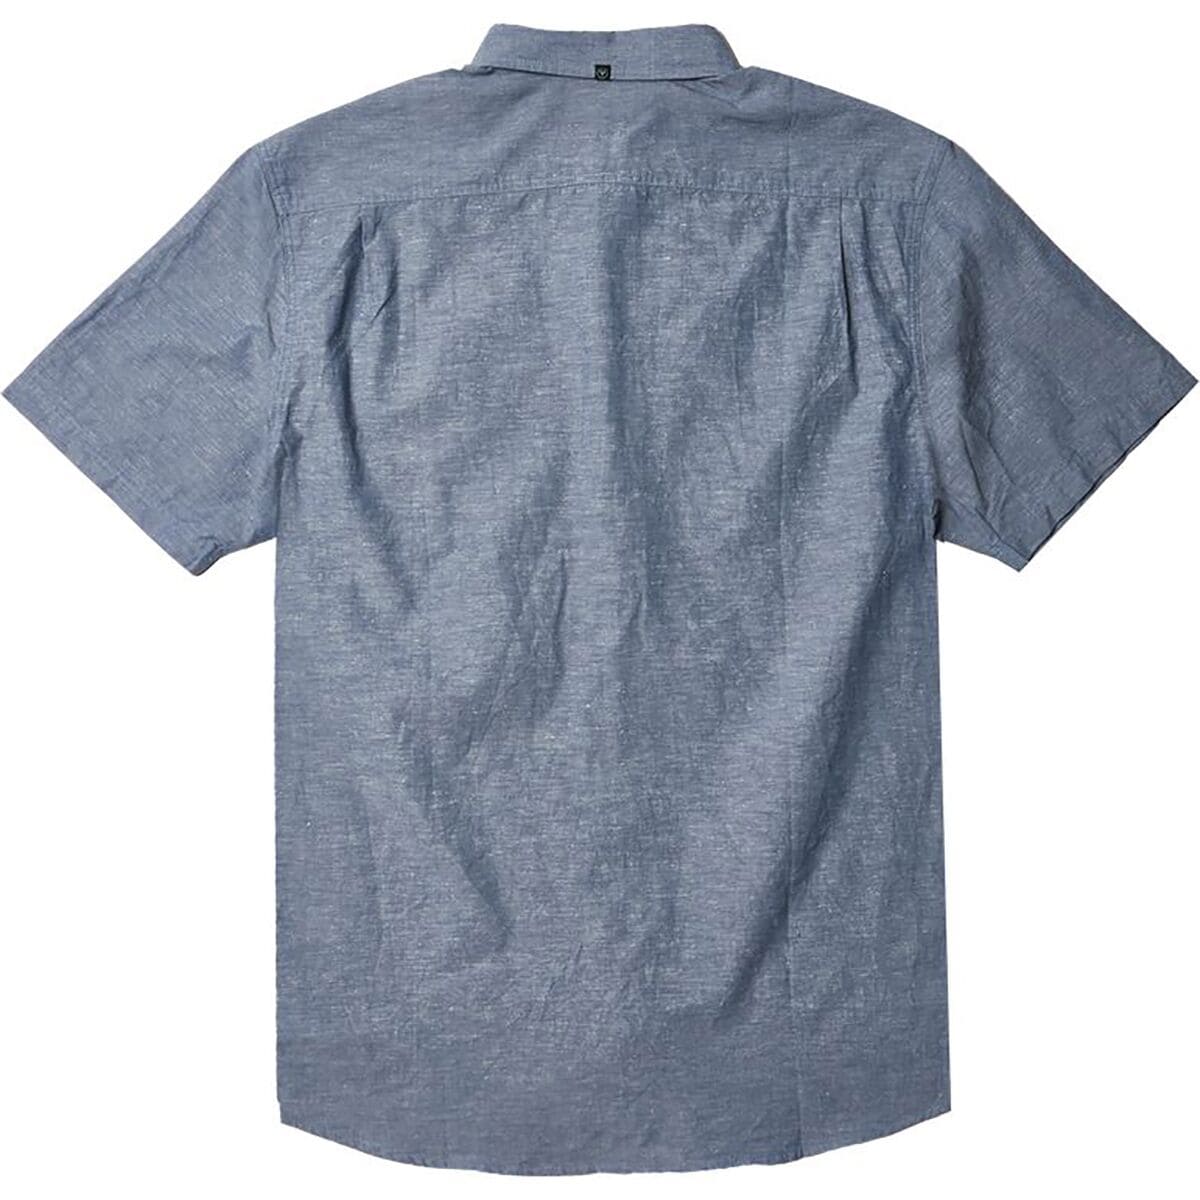 Vissla Sets Eco Shirt - Men's - Clothing